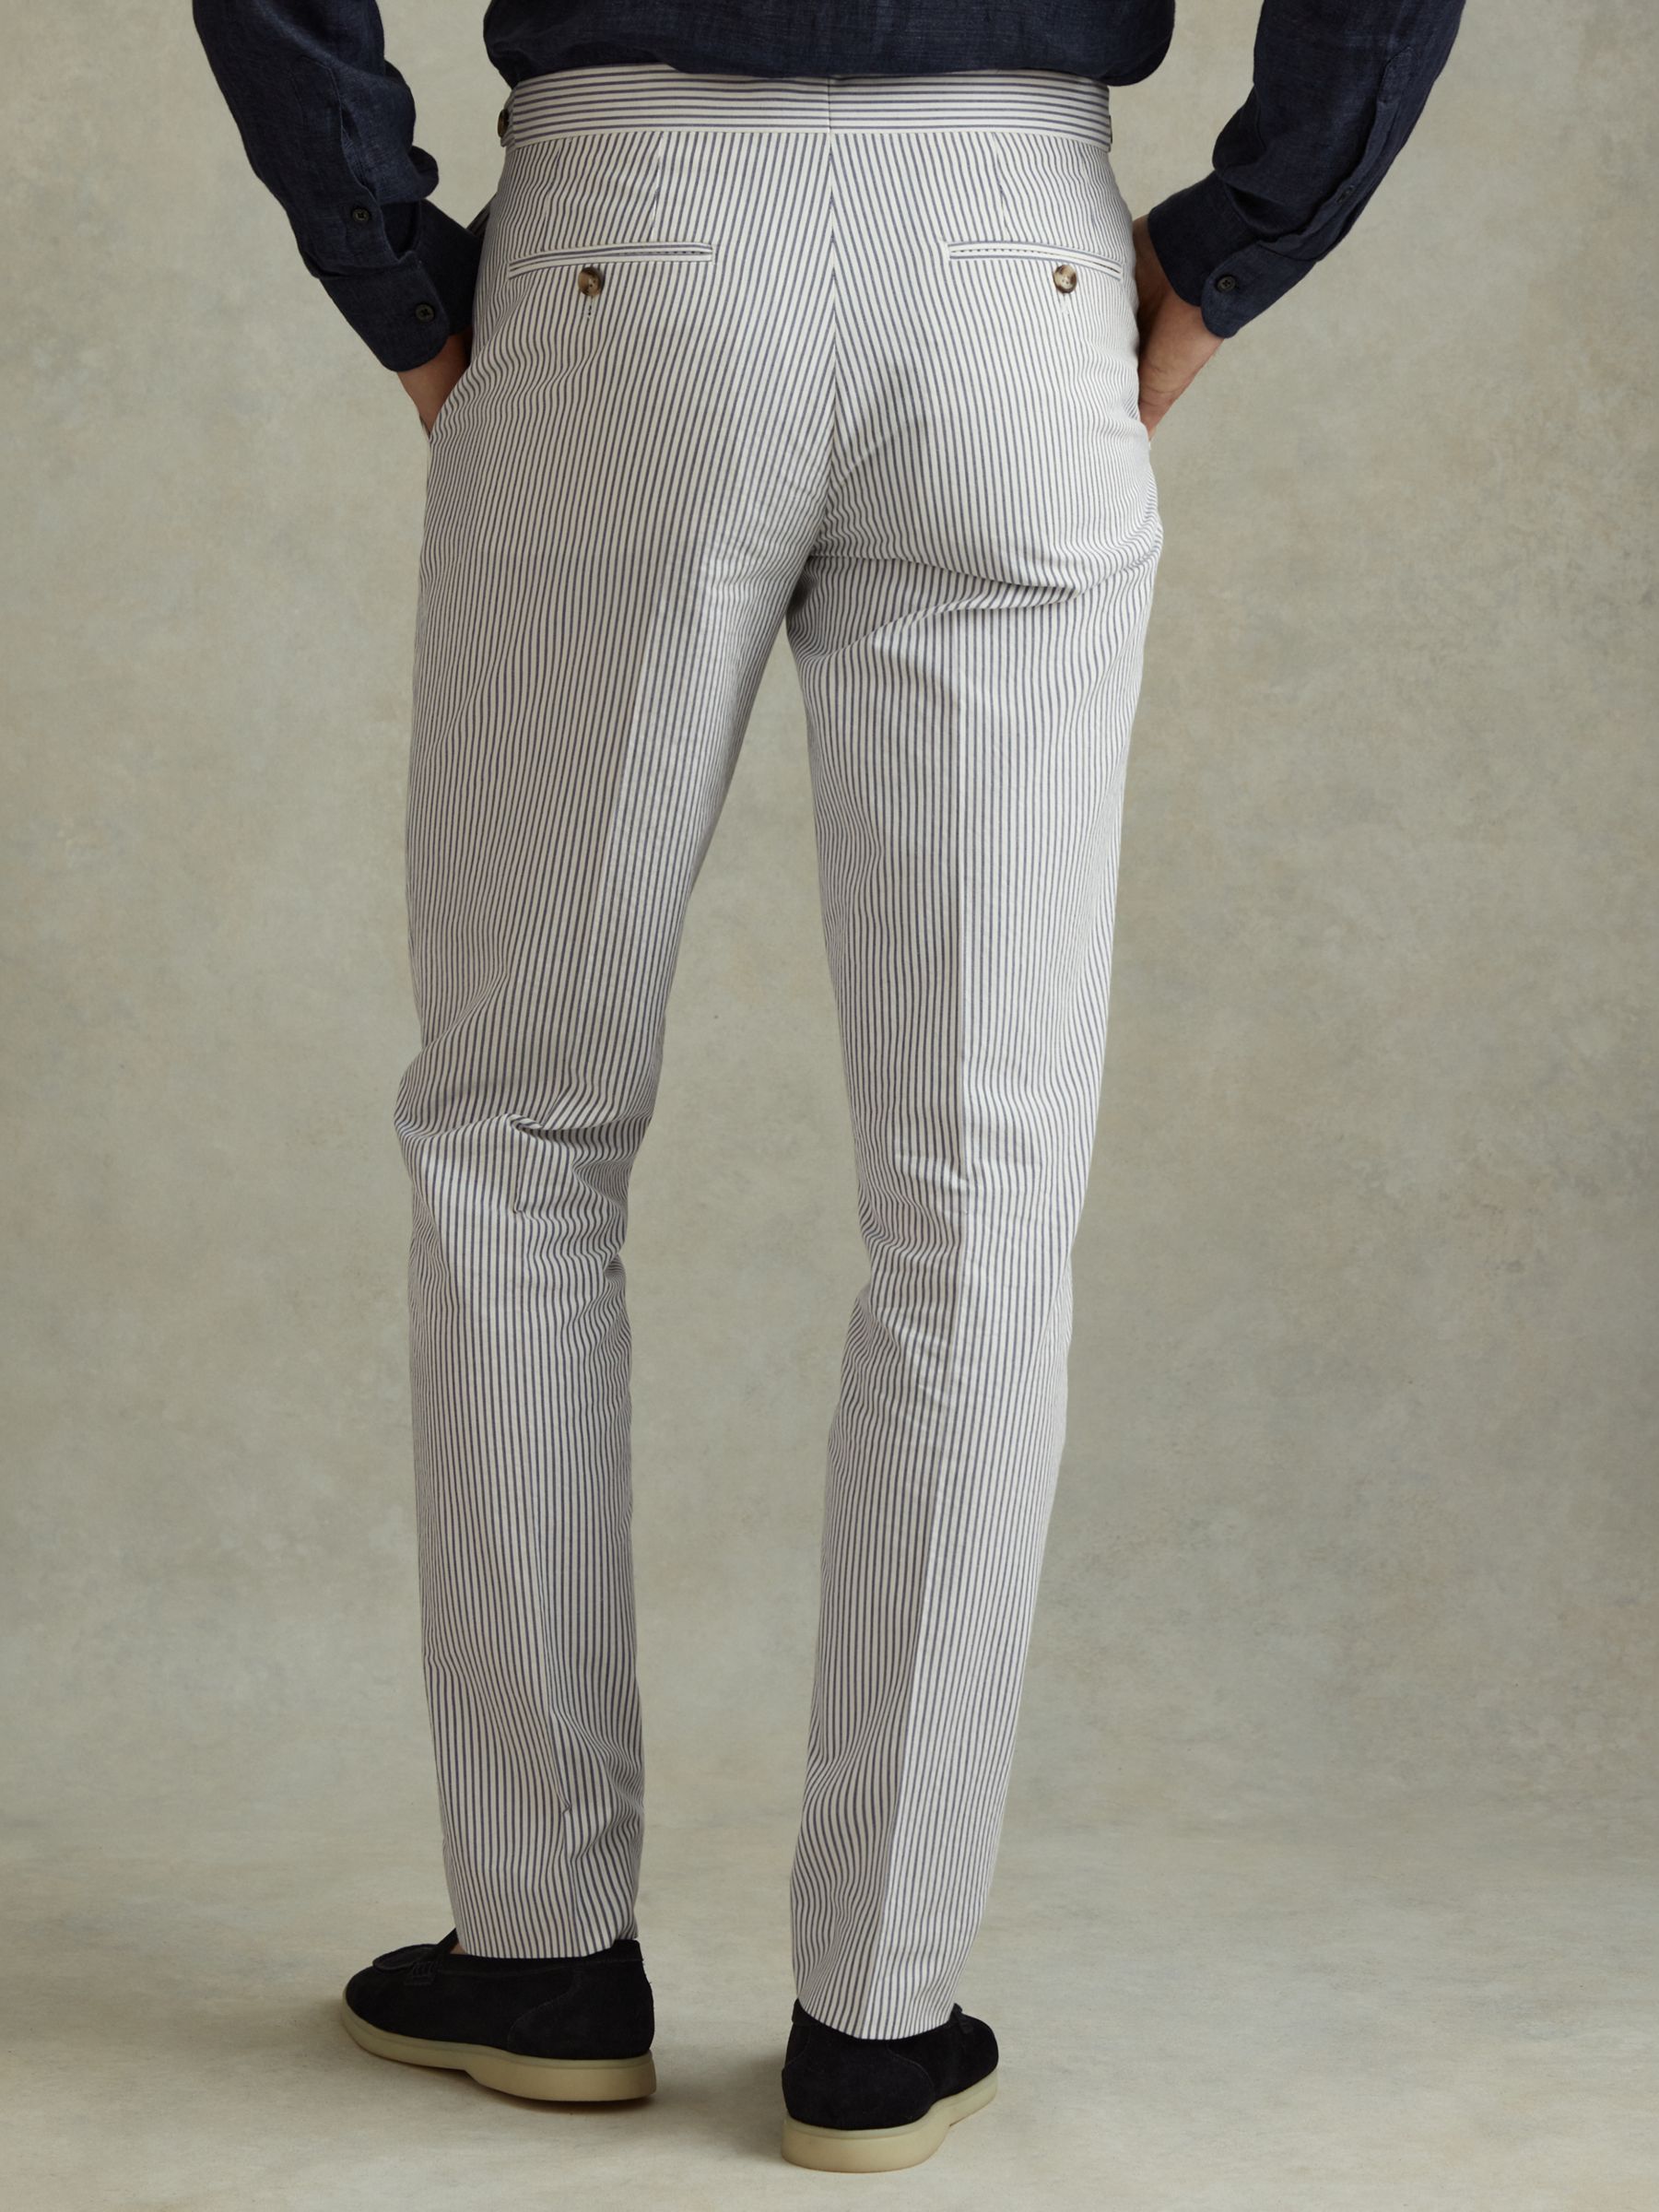 Buy Reiss Barr Stripe Straight Leg Suit Trousers, Soft Blue/White Online at johnlewis.com